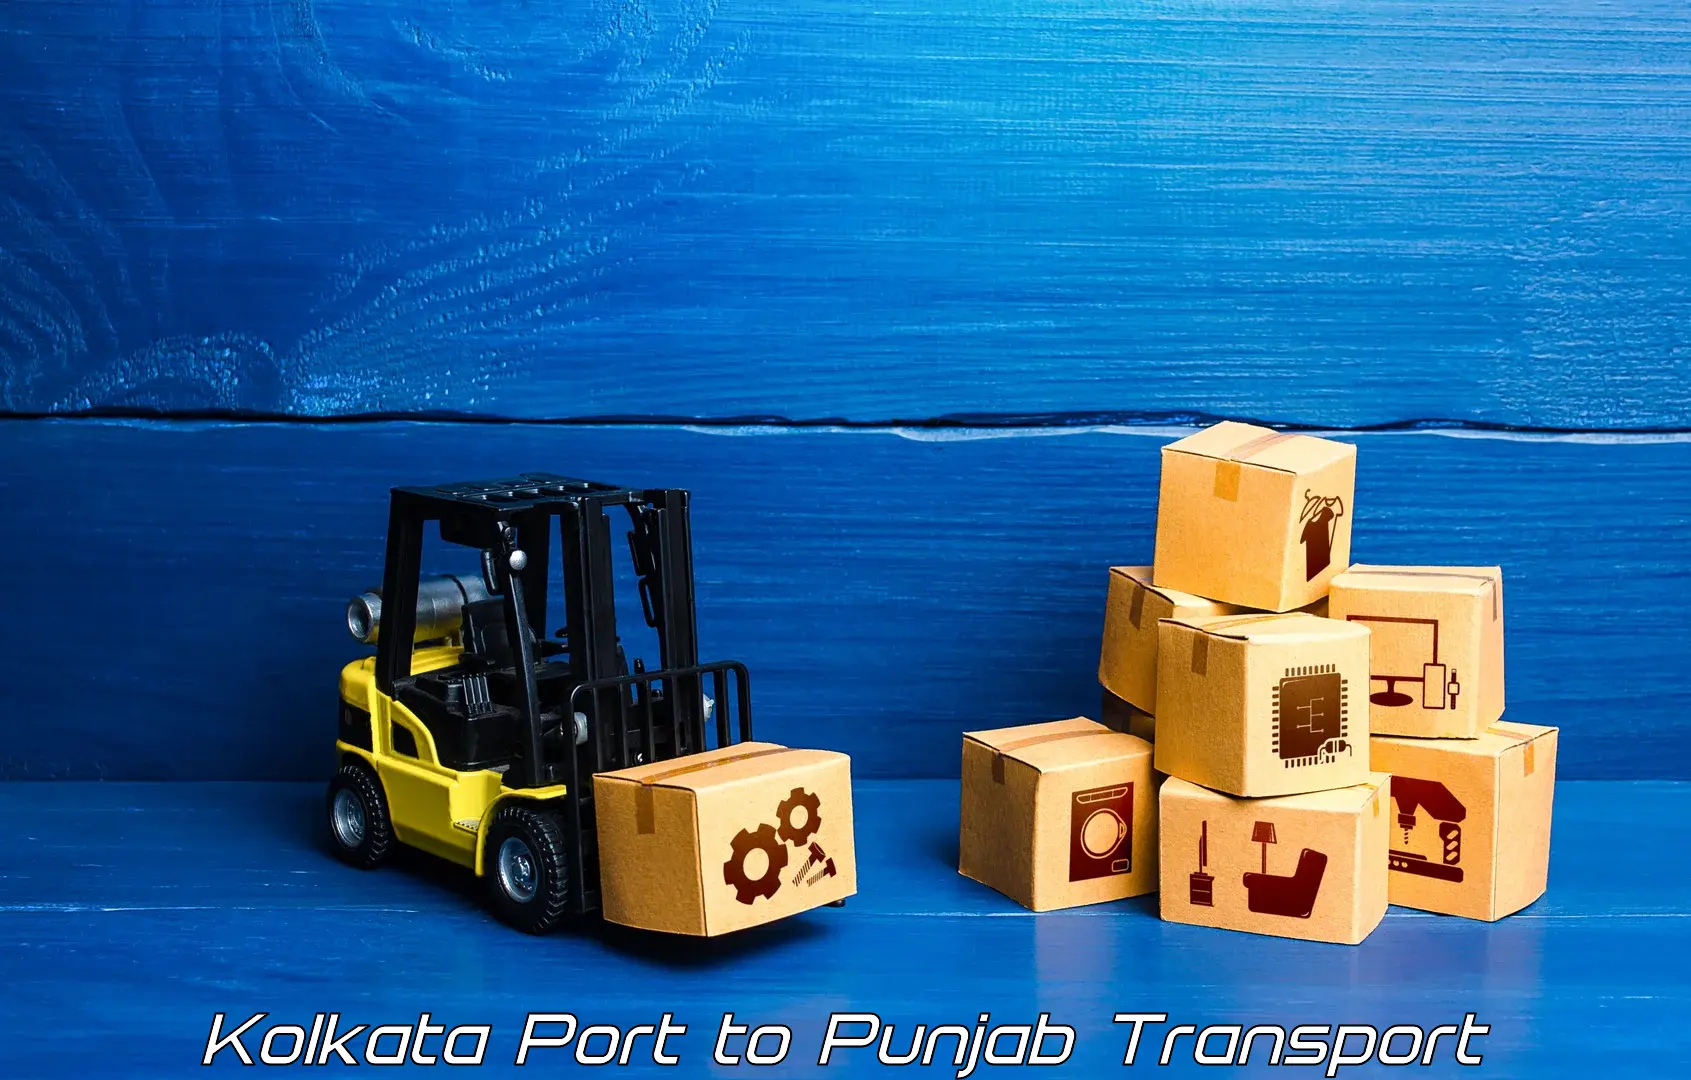 Goods delivery service Kolkata Port to Mohali